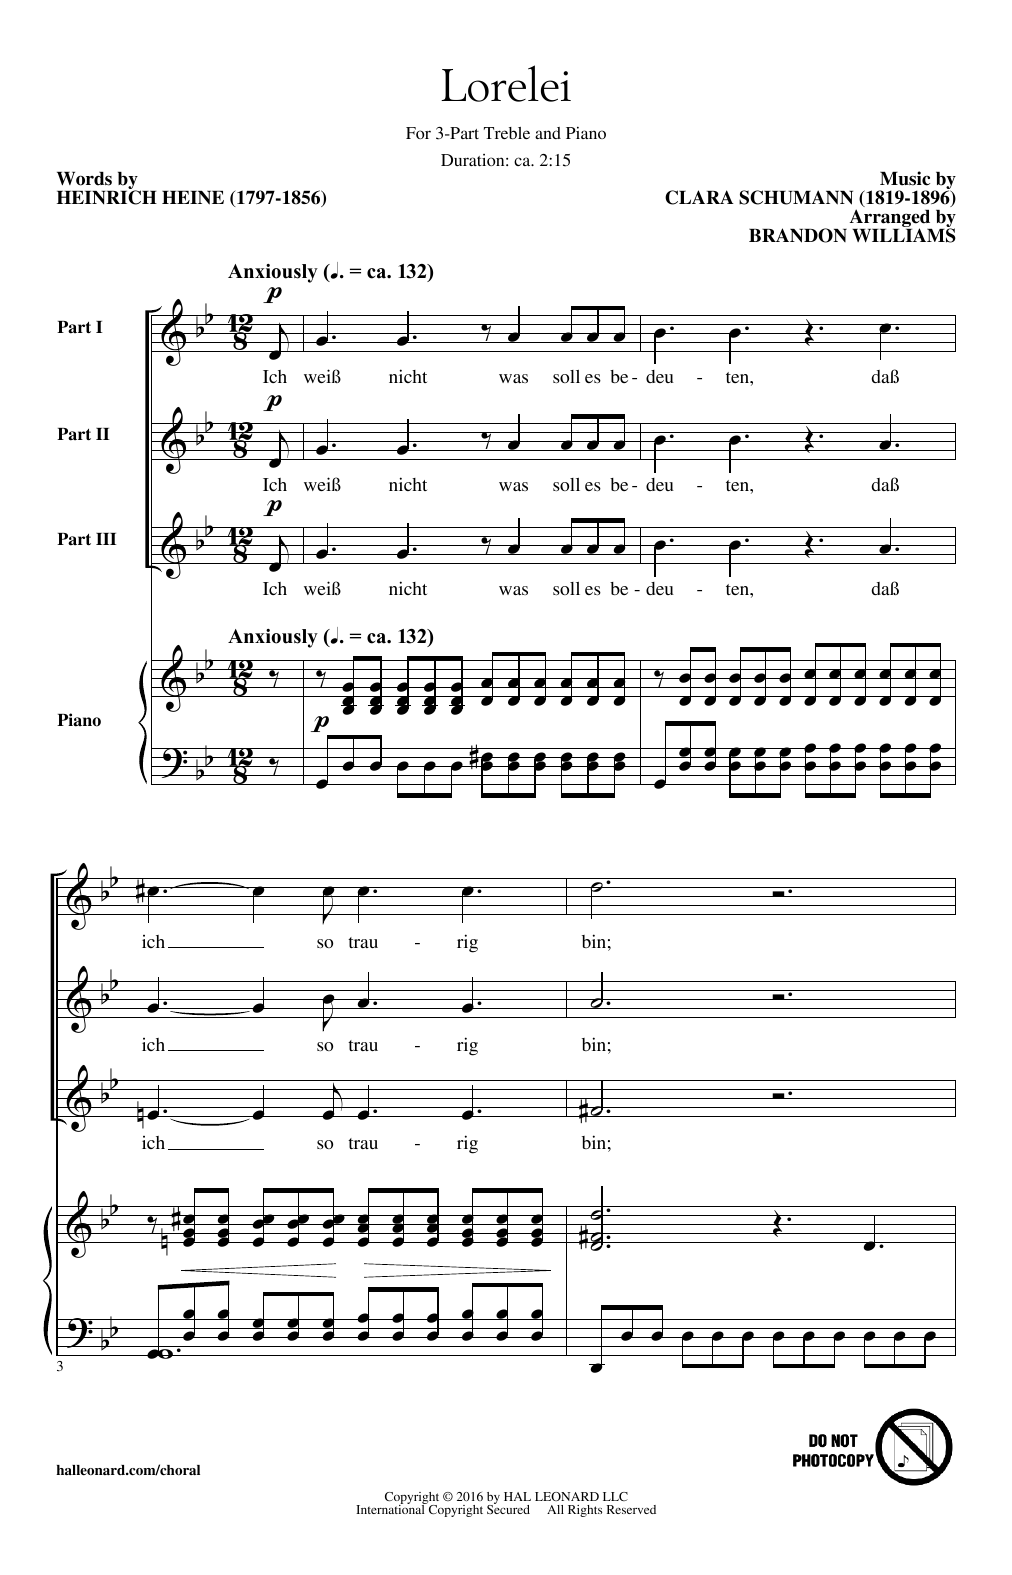 Brandon Williams Lorelei sheet music notes and chords arranged for 3-Part Treble Choir